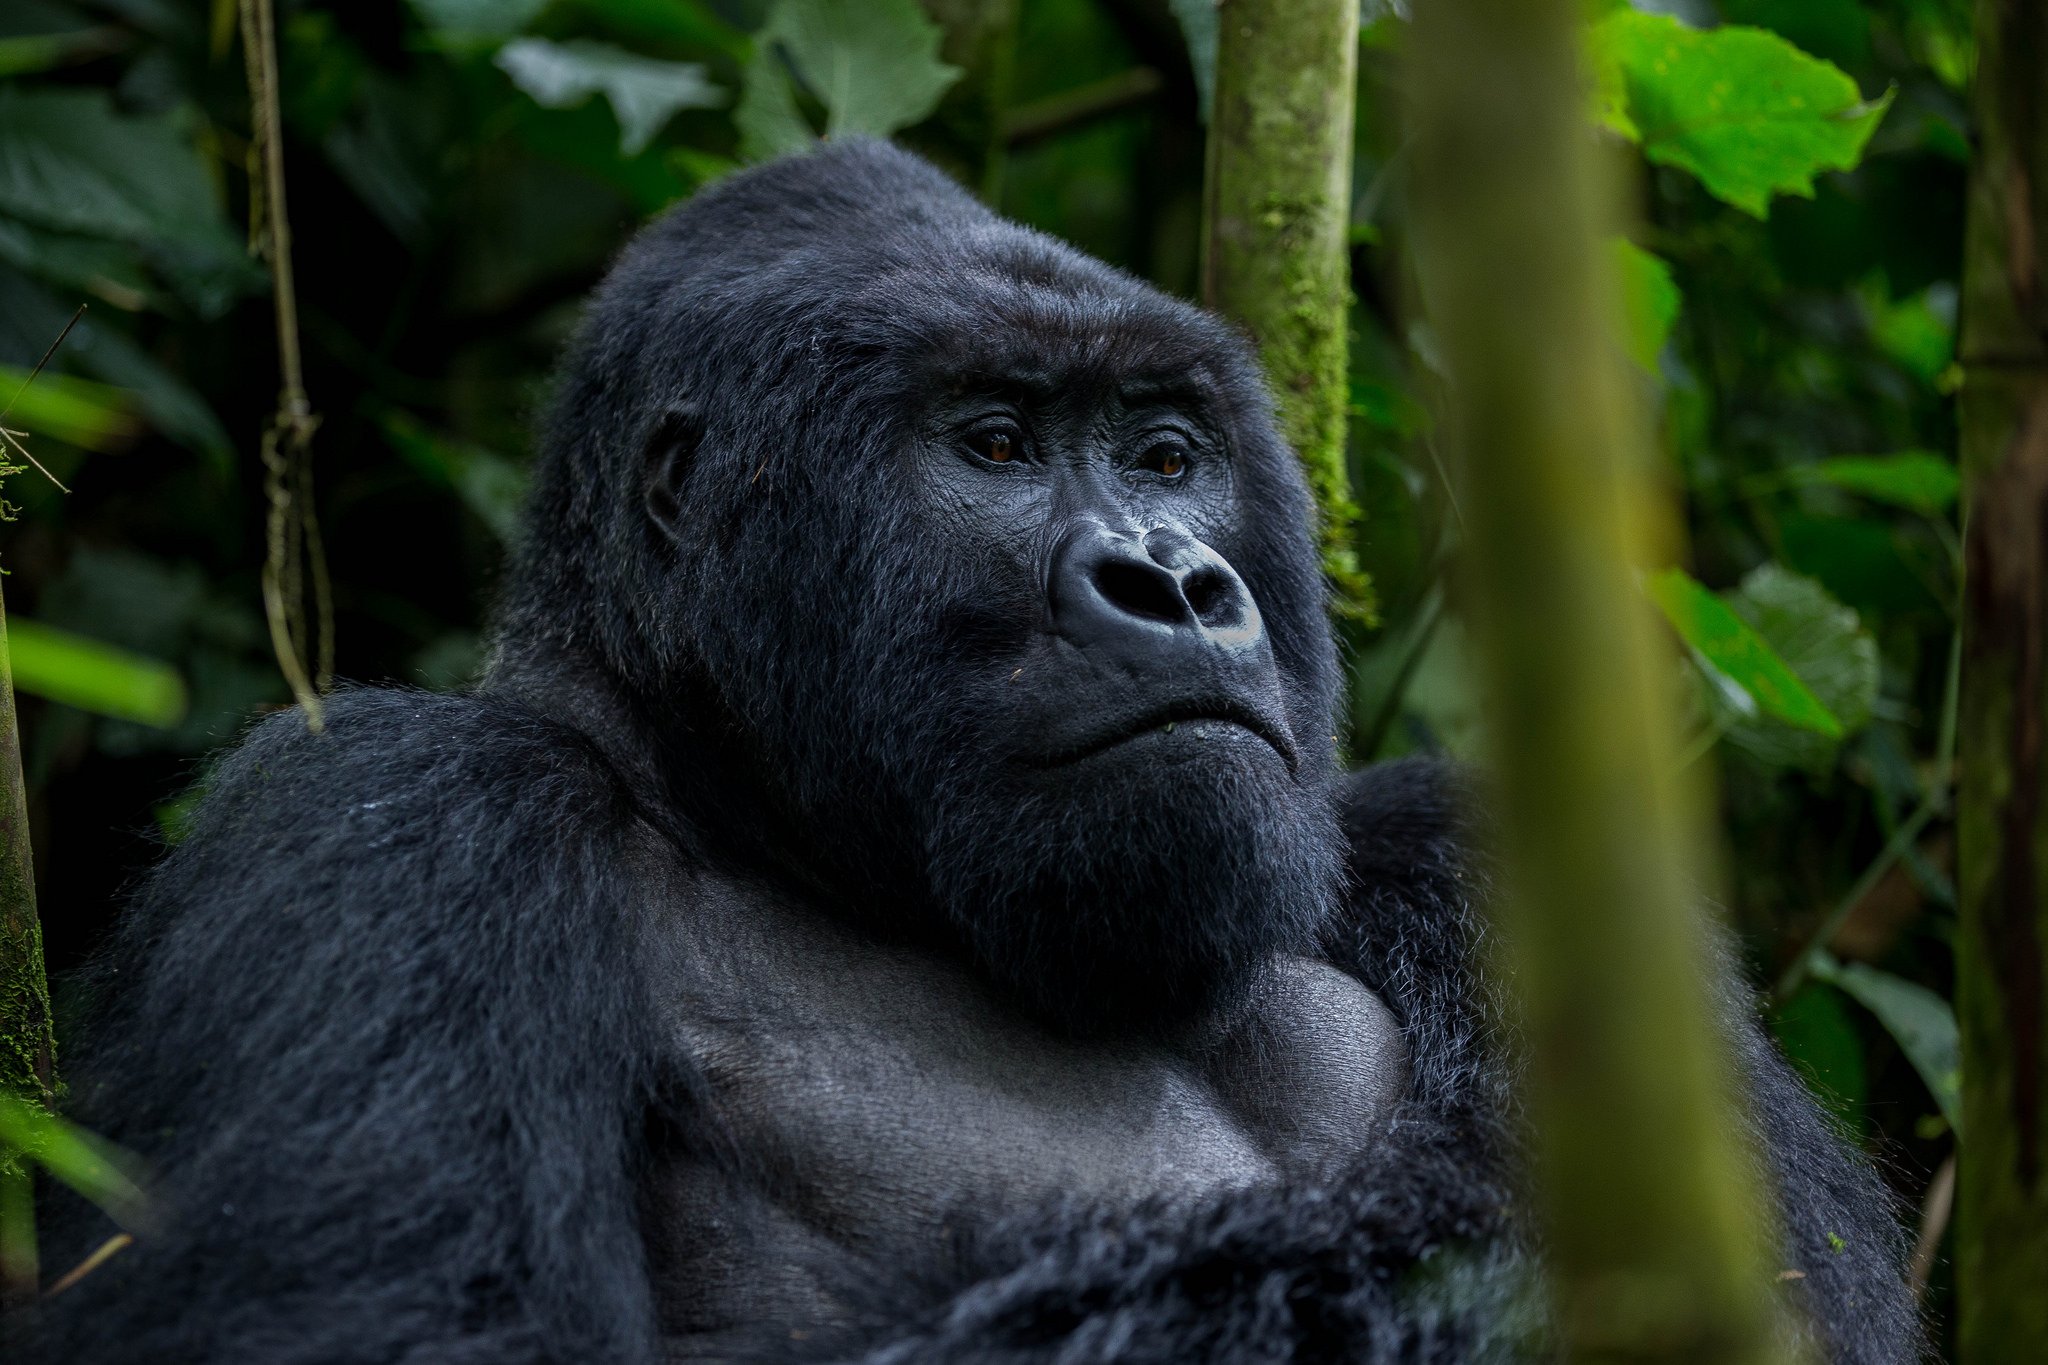 How to Book gorilla habituation permits in Uganda